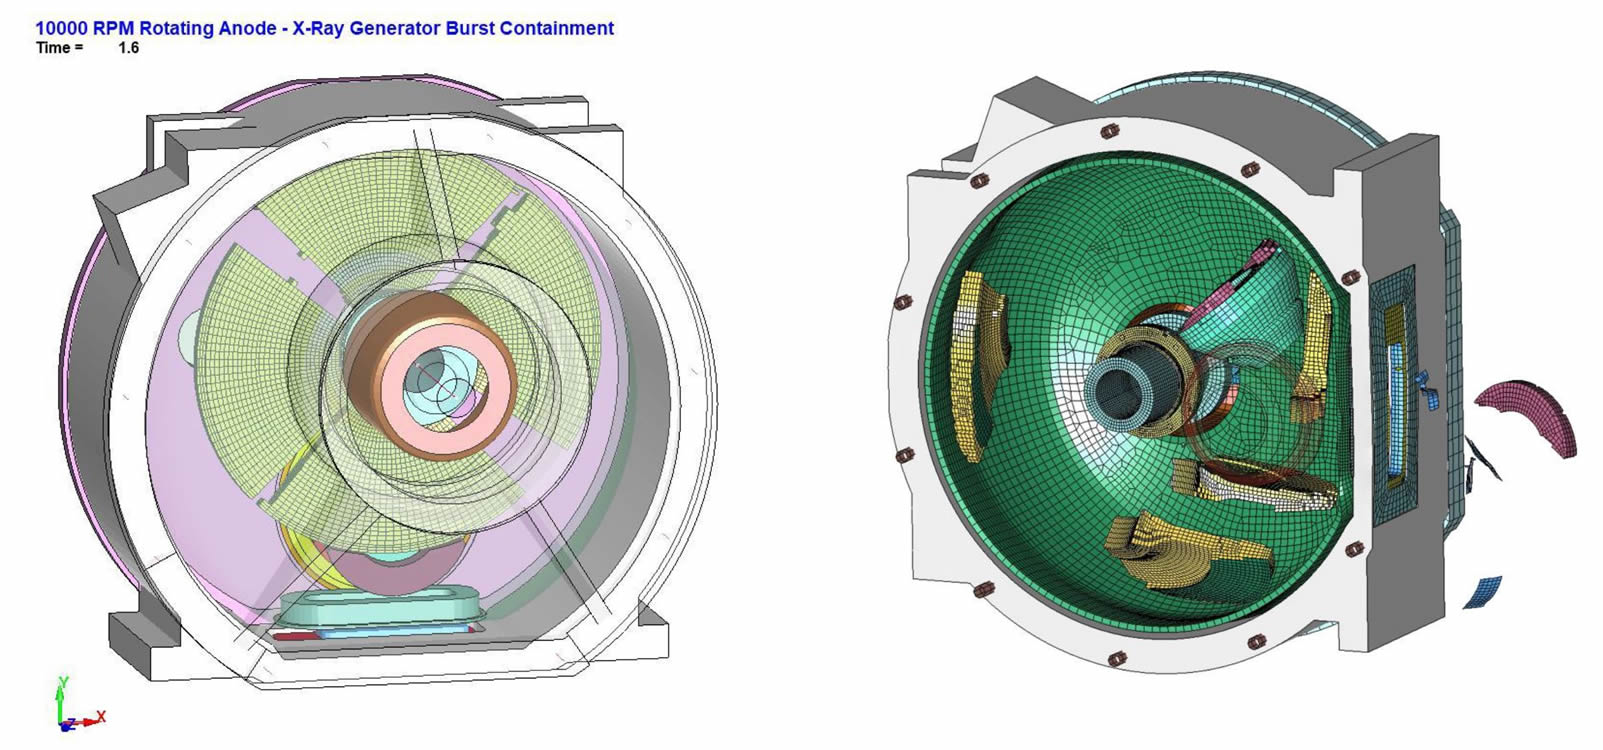 10,000 RPM Rotating Anode X-Ray Generator Burst Containment  and 10,000 RPM Rotating Anode X-Ray Generator for CT Medical Imaging - Burst Containment - Burst Simulation 